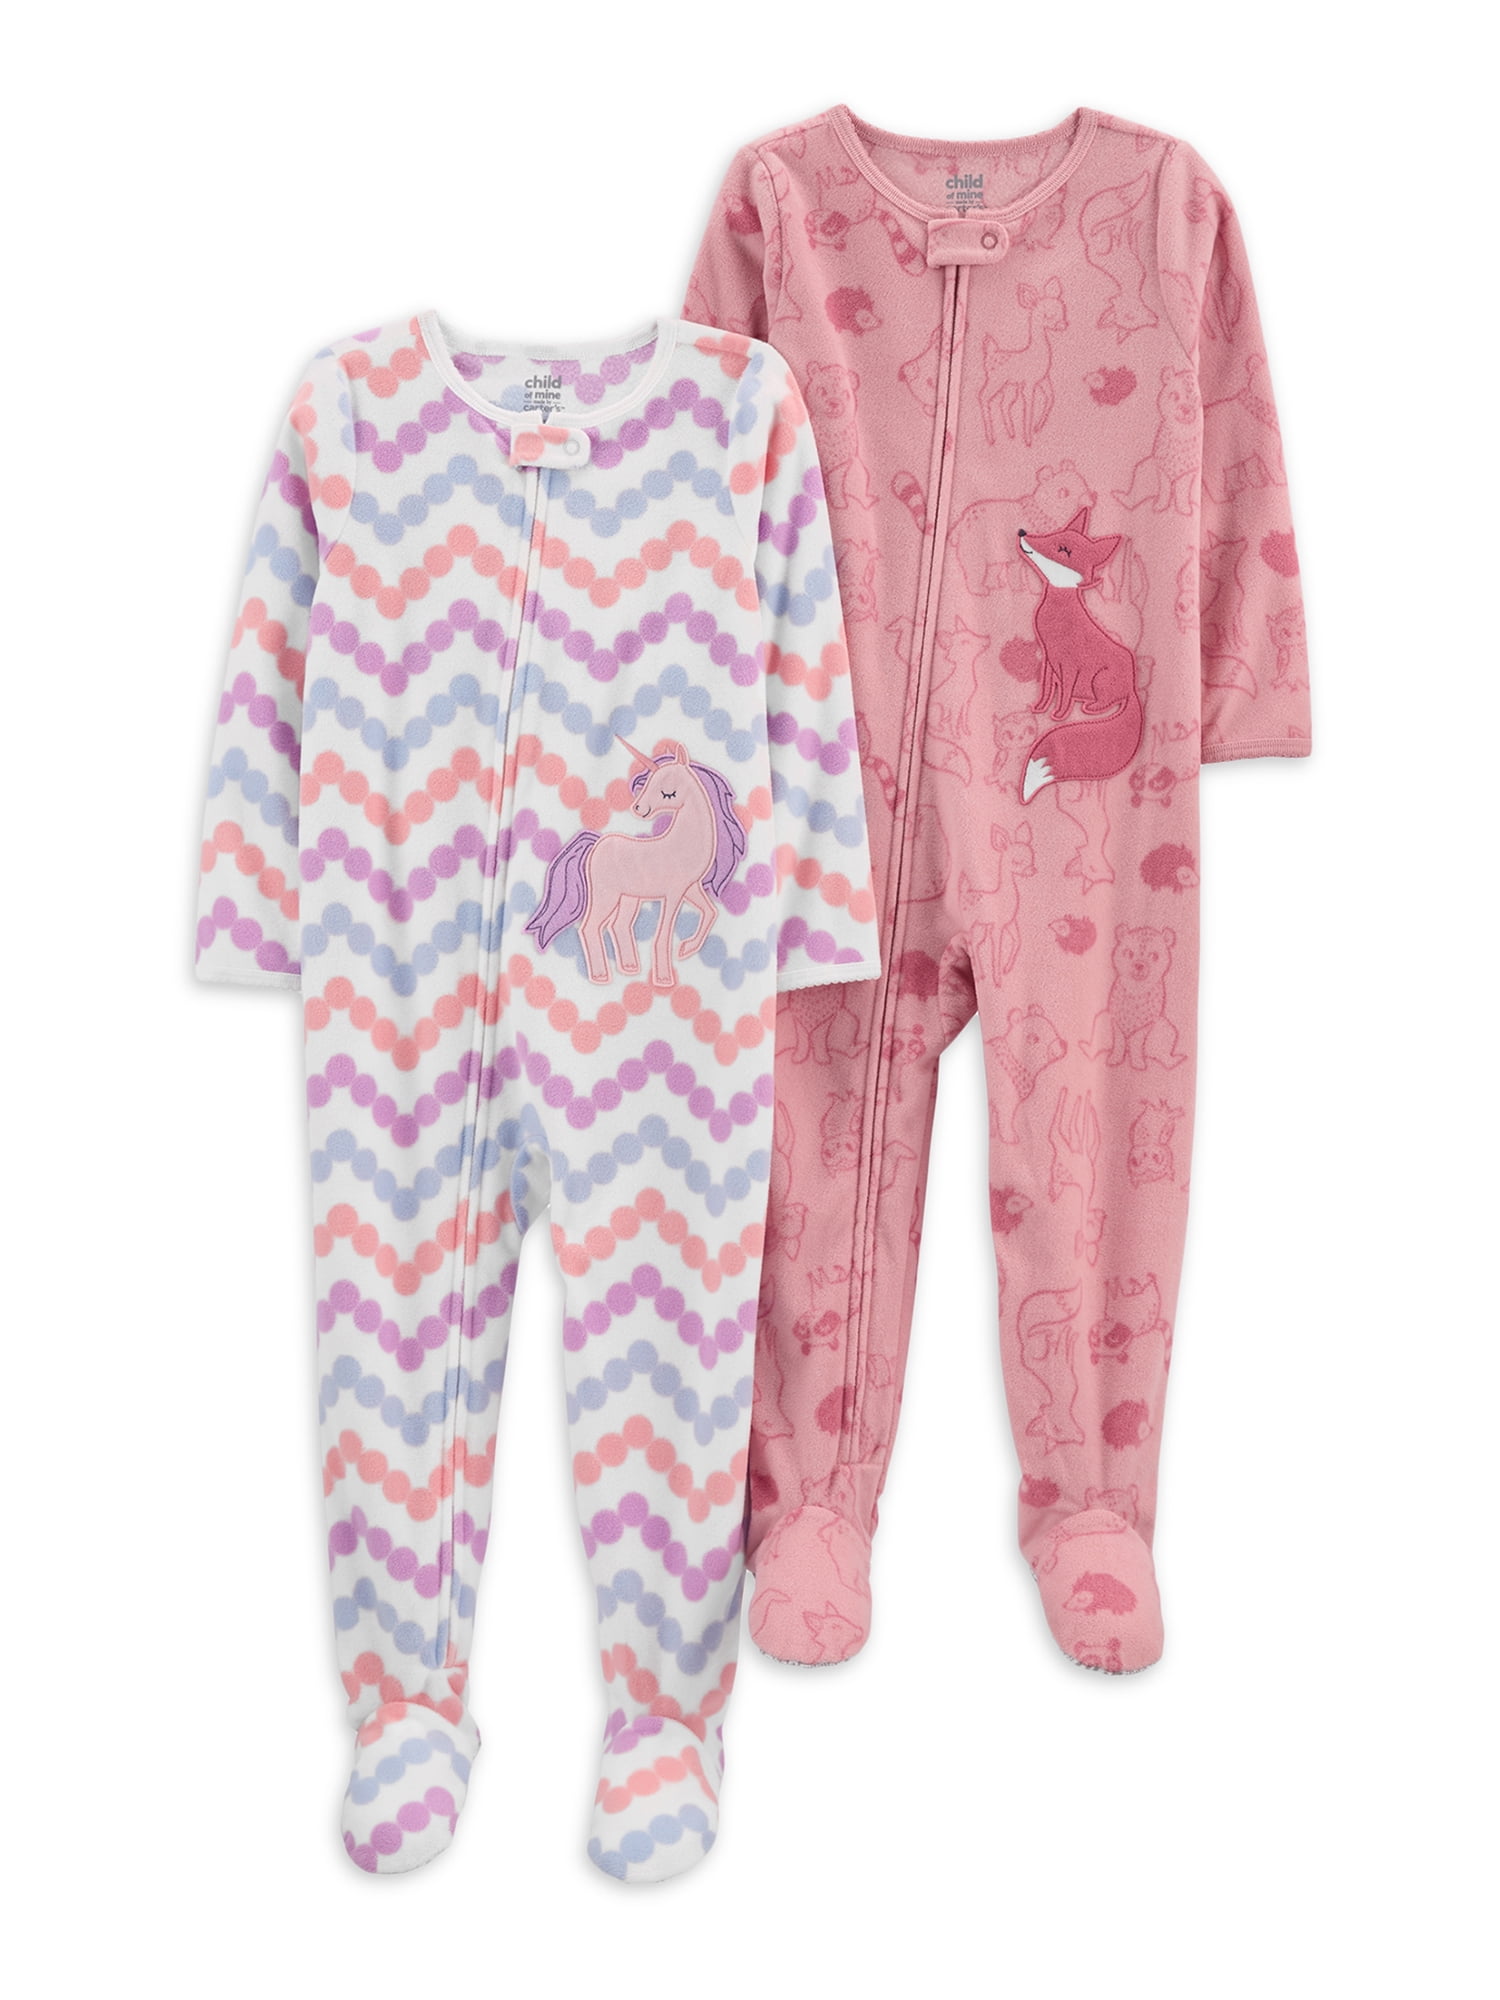 Carters Baby Girls 2-Pack Cotton Footless Pajamas